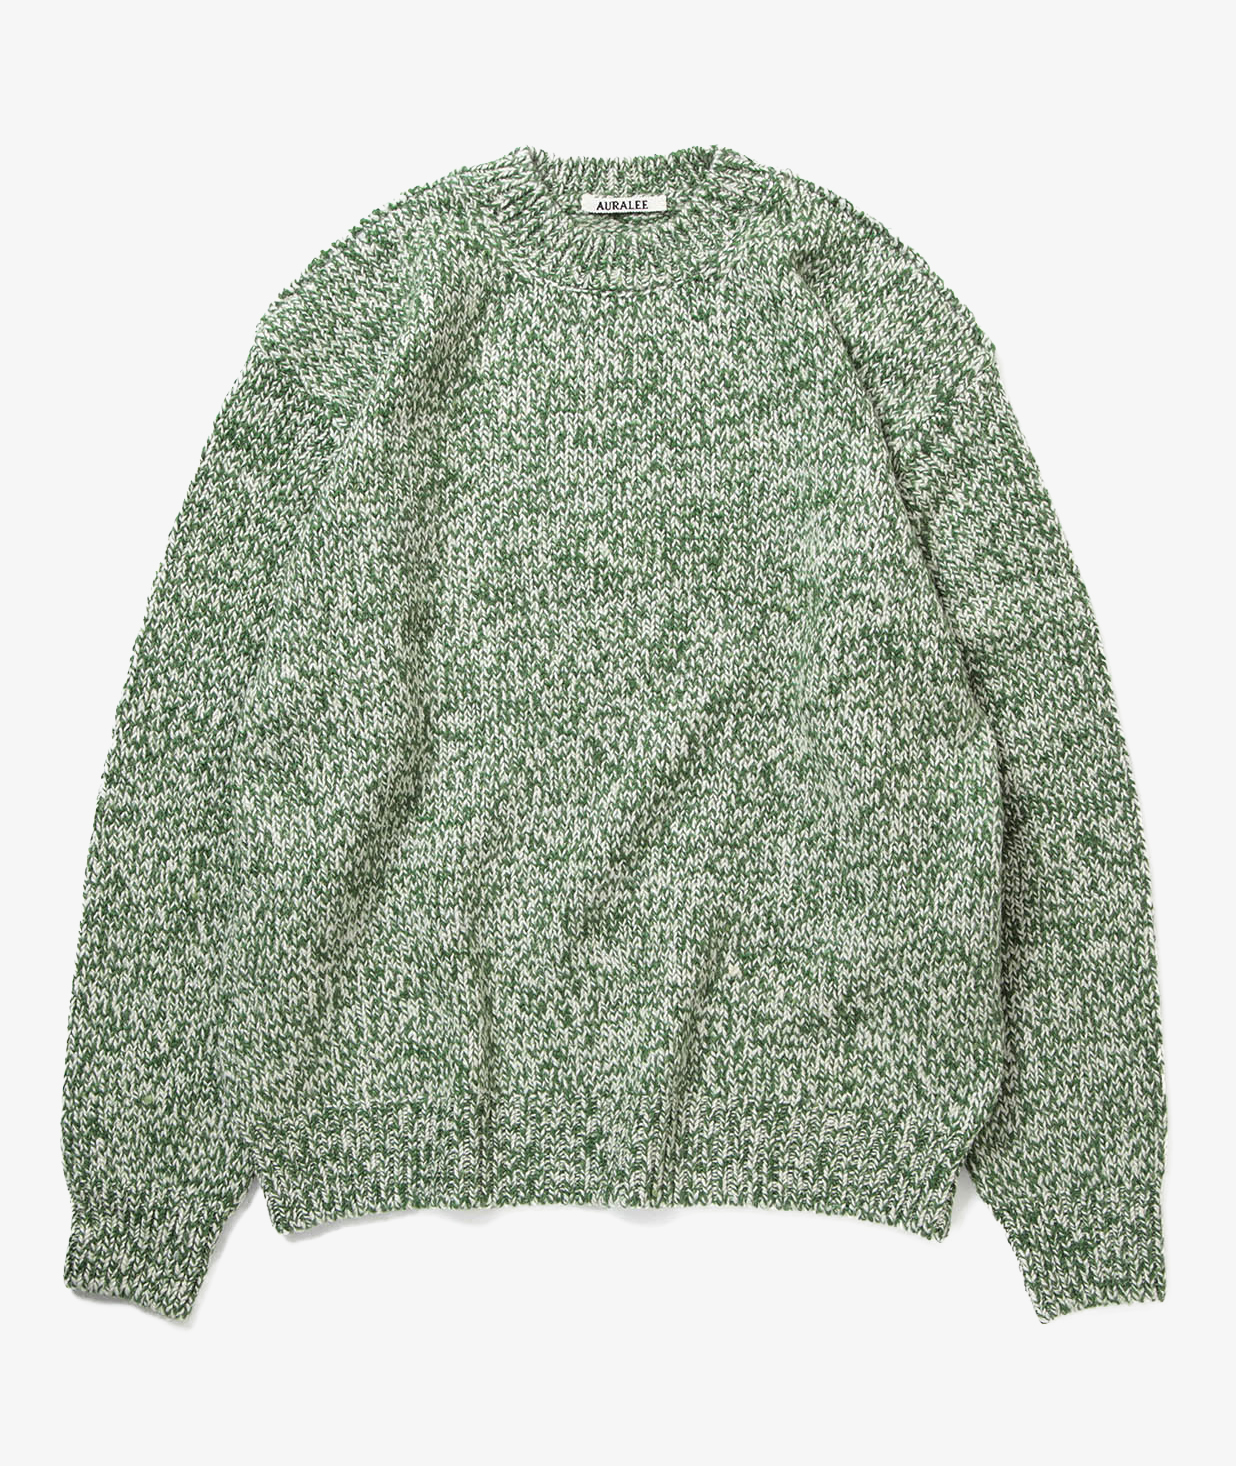 Wool yarn sweatshirt, camel